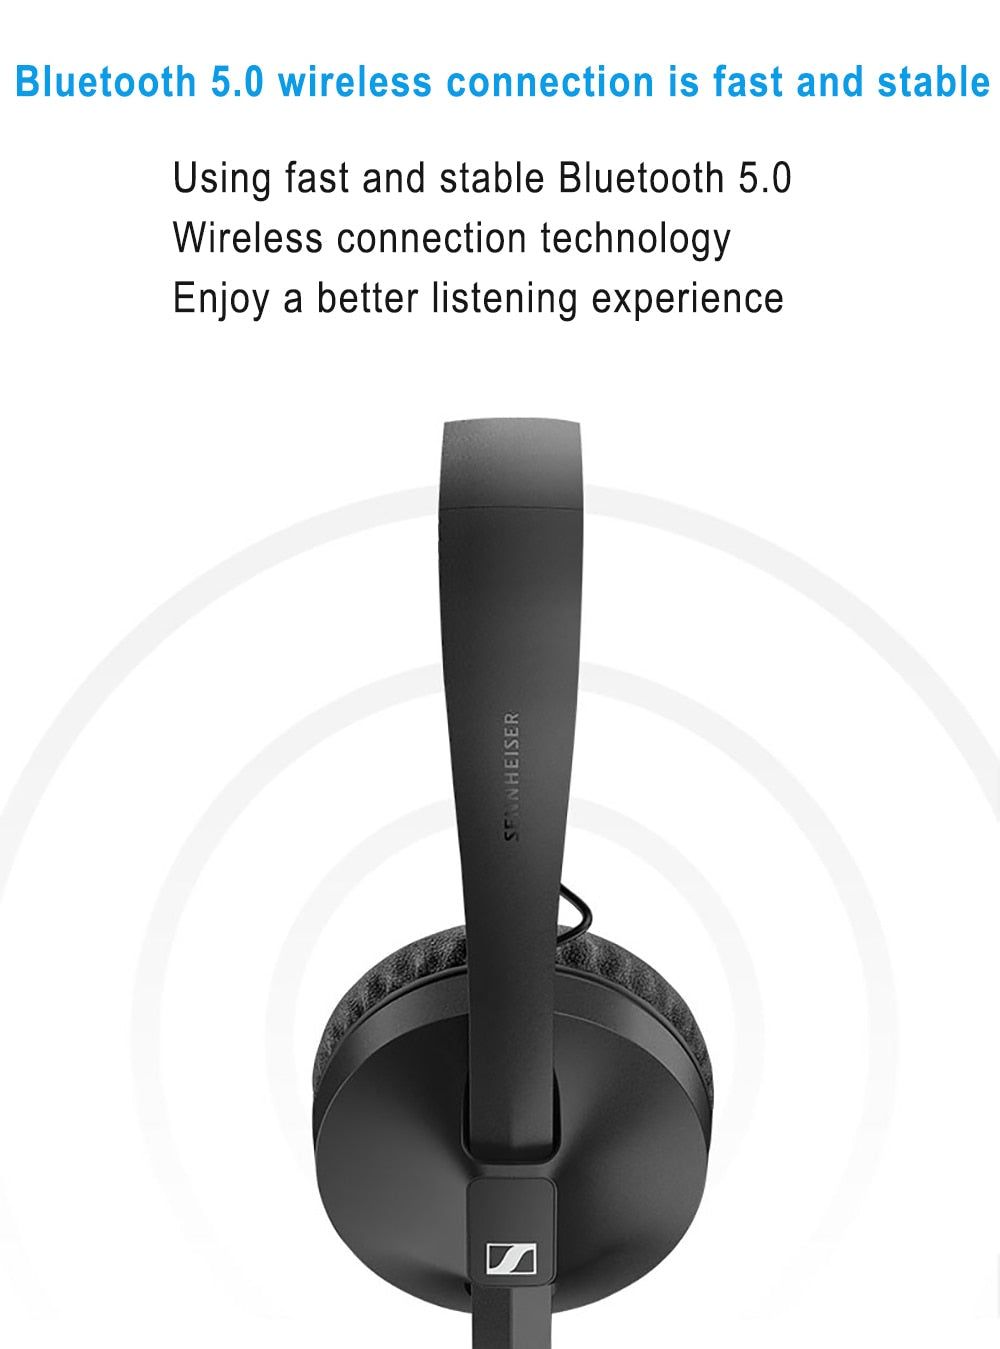 SENNHEISER HD250BT Bluetooth Headphones | Hifi Media Store